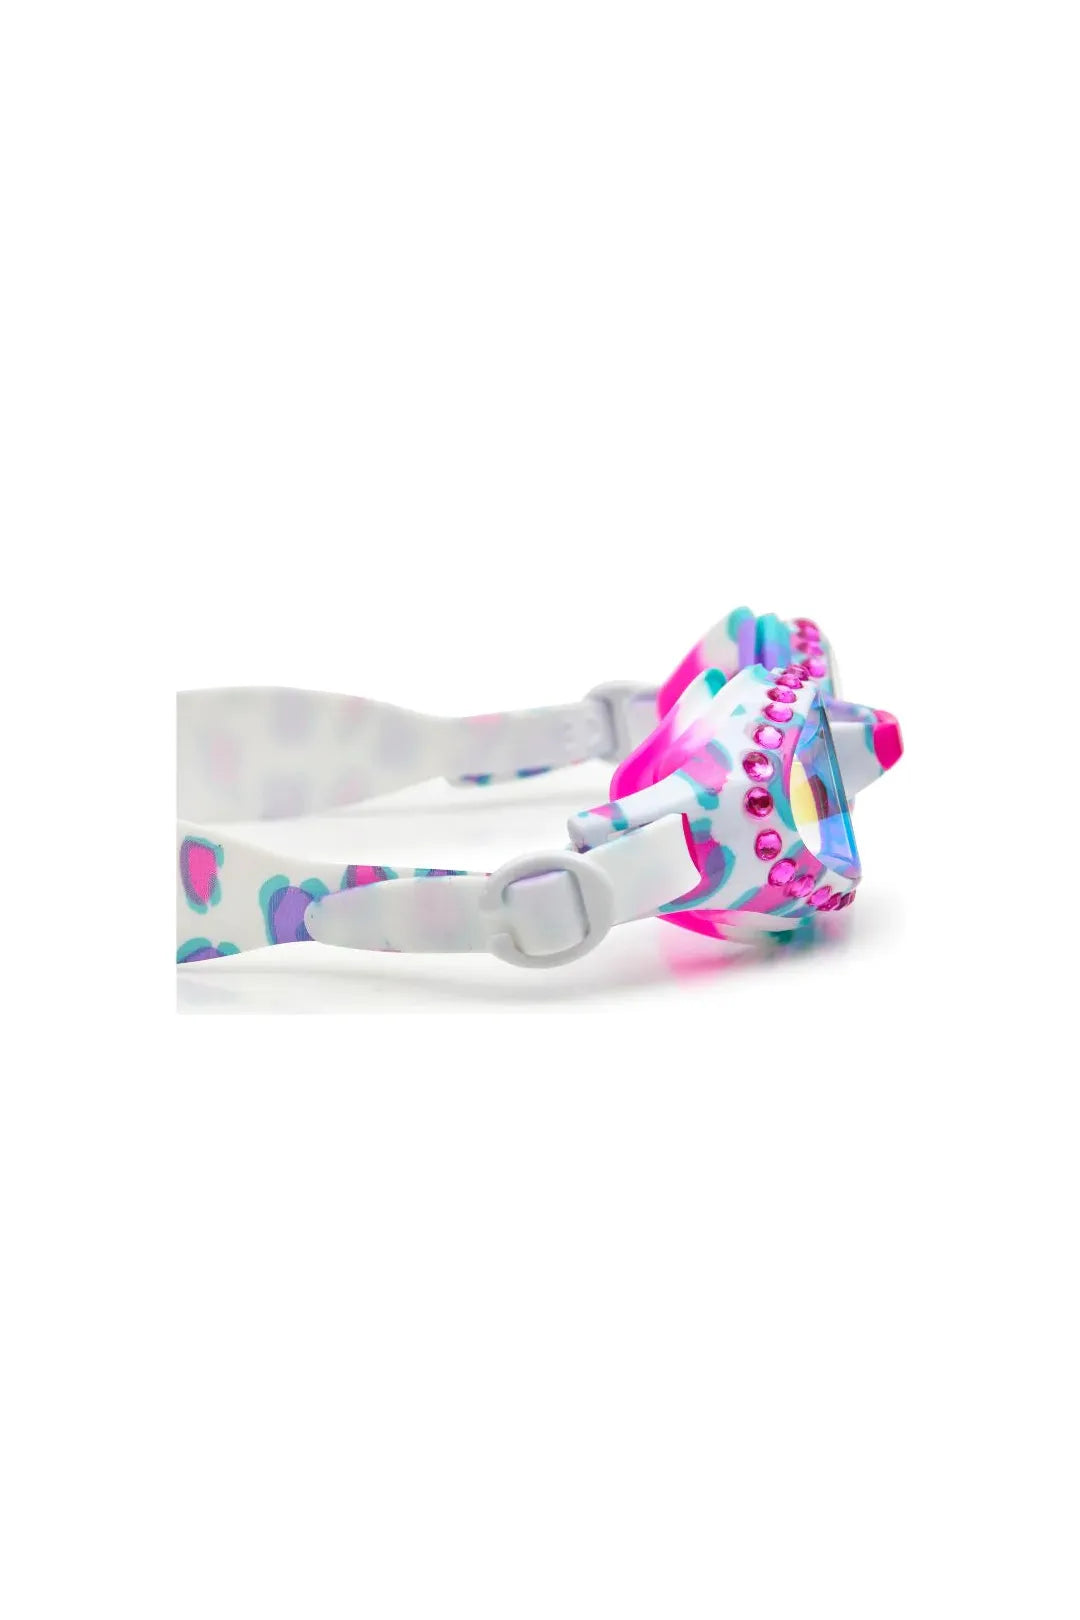 Bling20 Swim Goggles - Cai B -Purrincess Pink